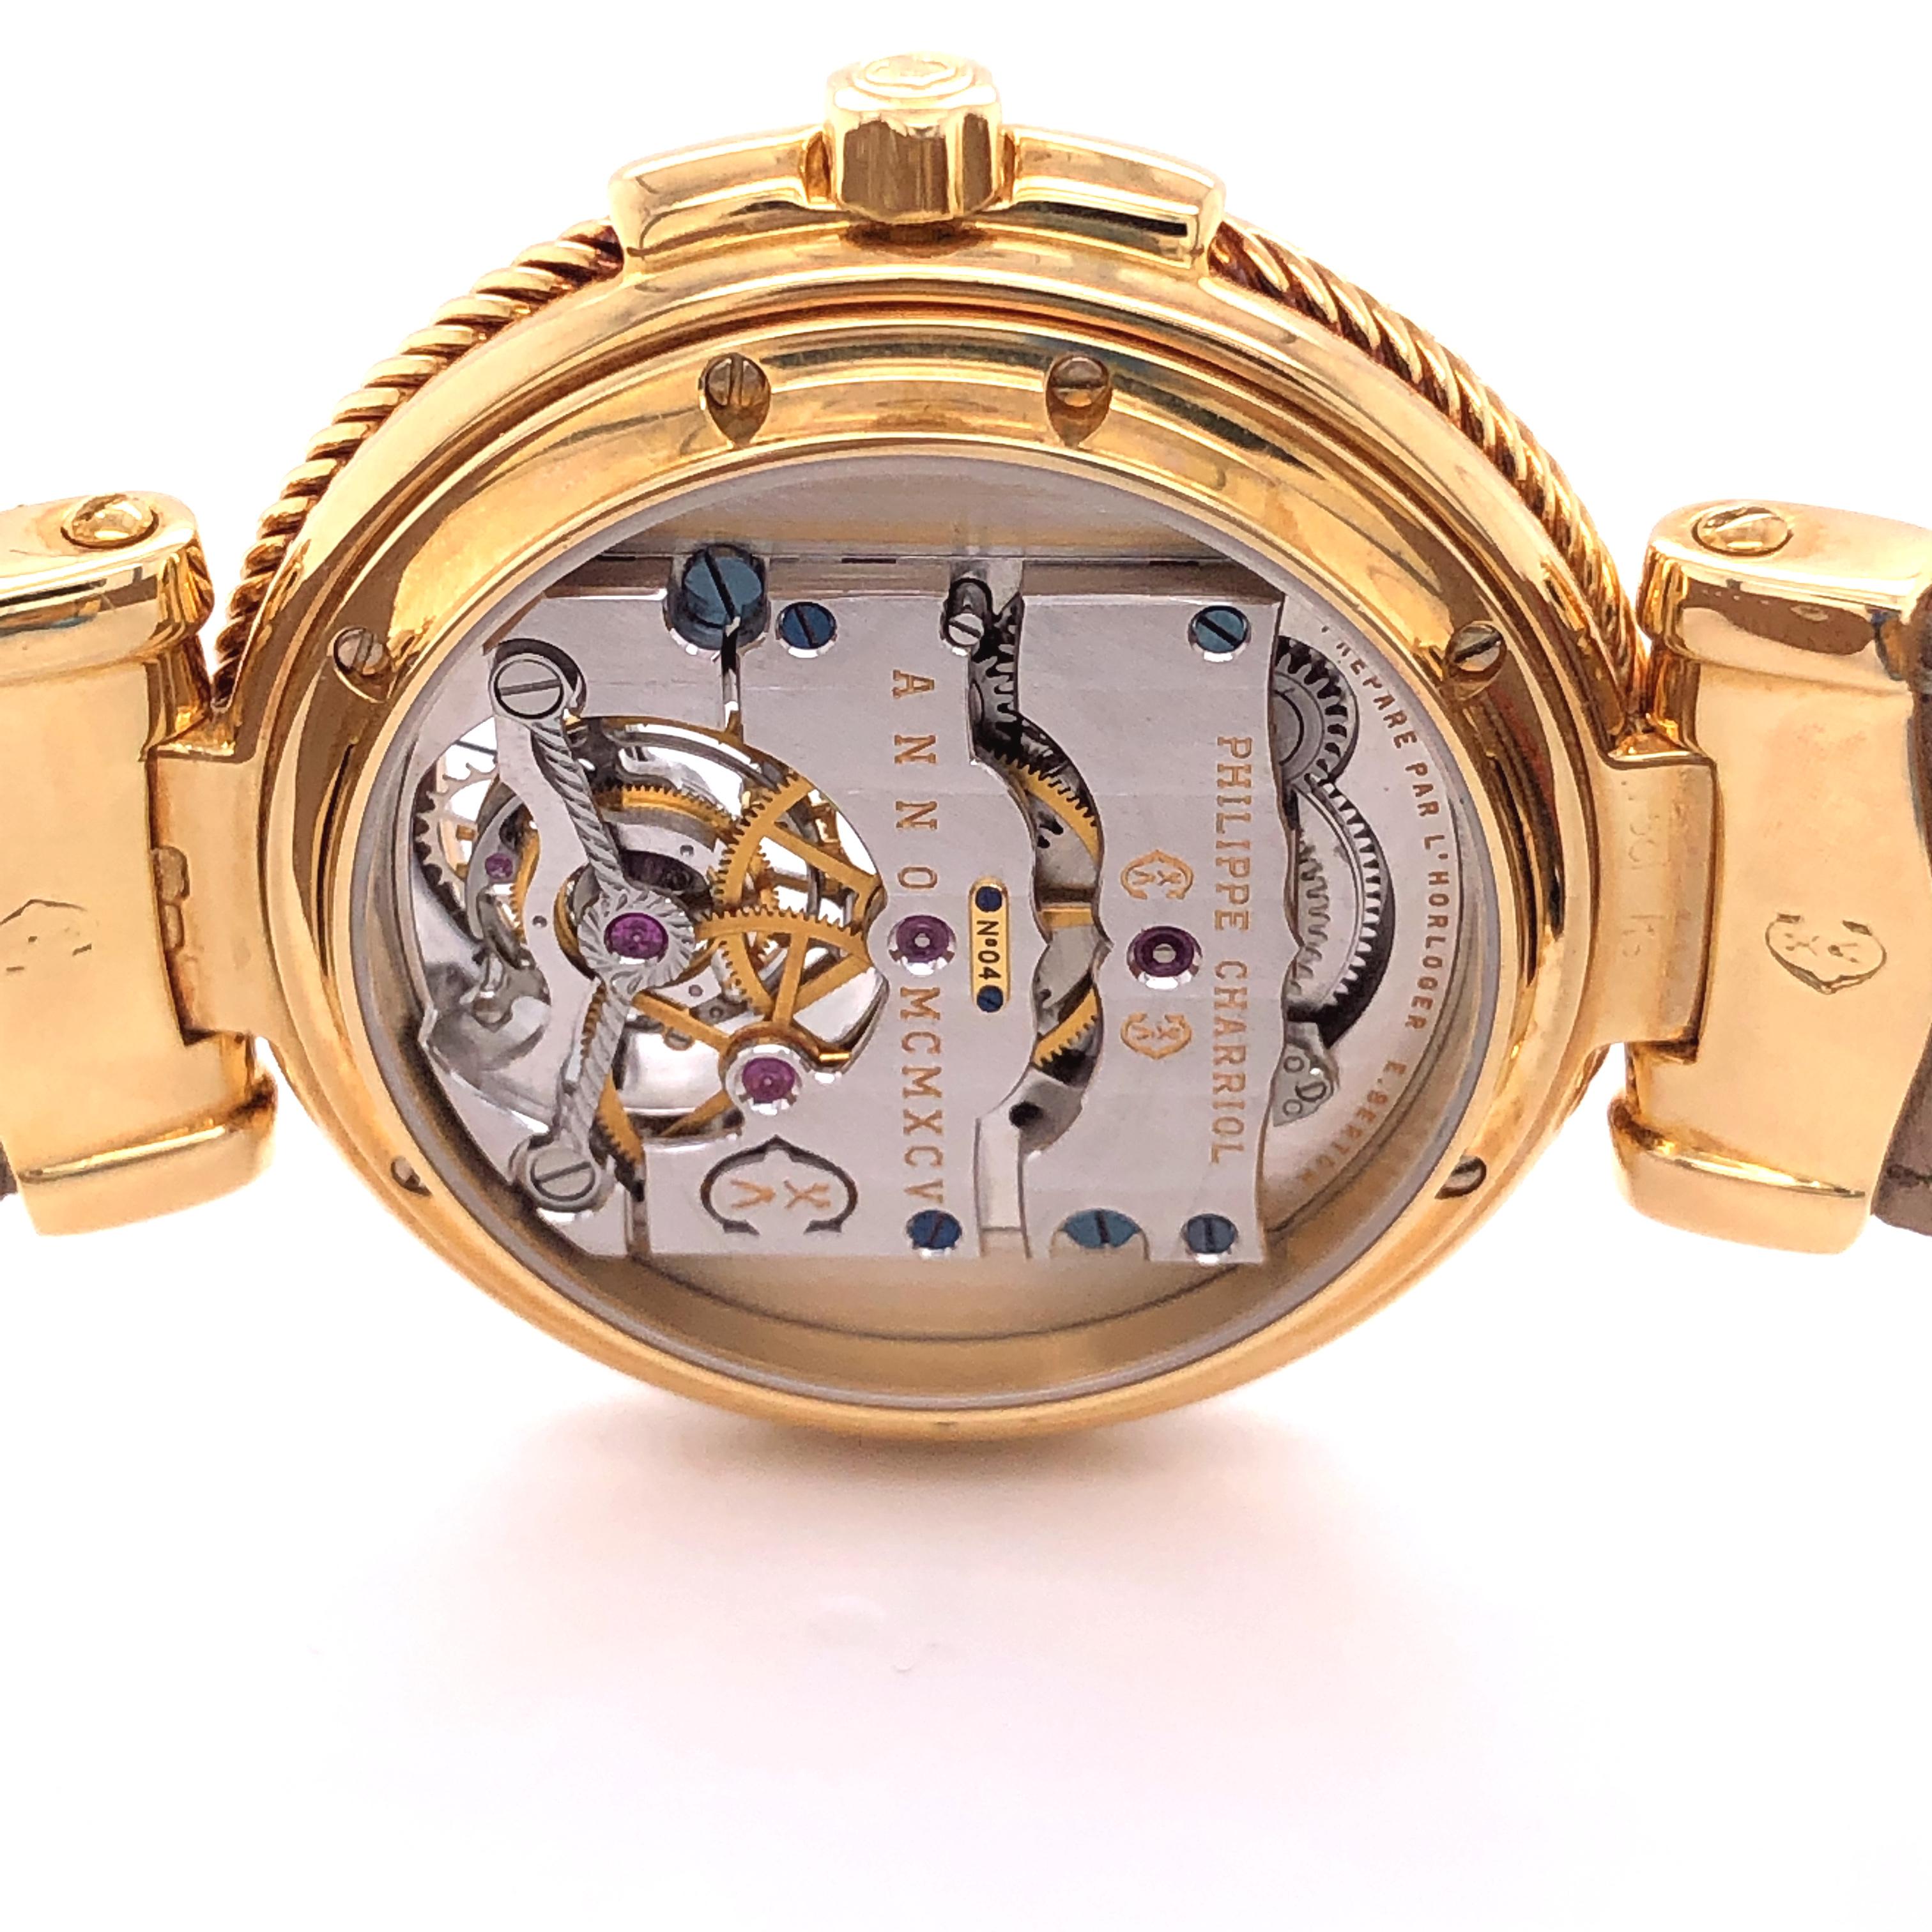 Philippe Charriol Tourbillon 18 Karat Yellow Gold Bezel Watch Limited Edition #4 For Sale 2